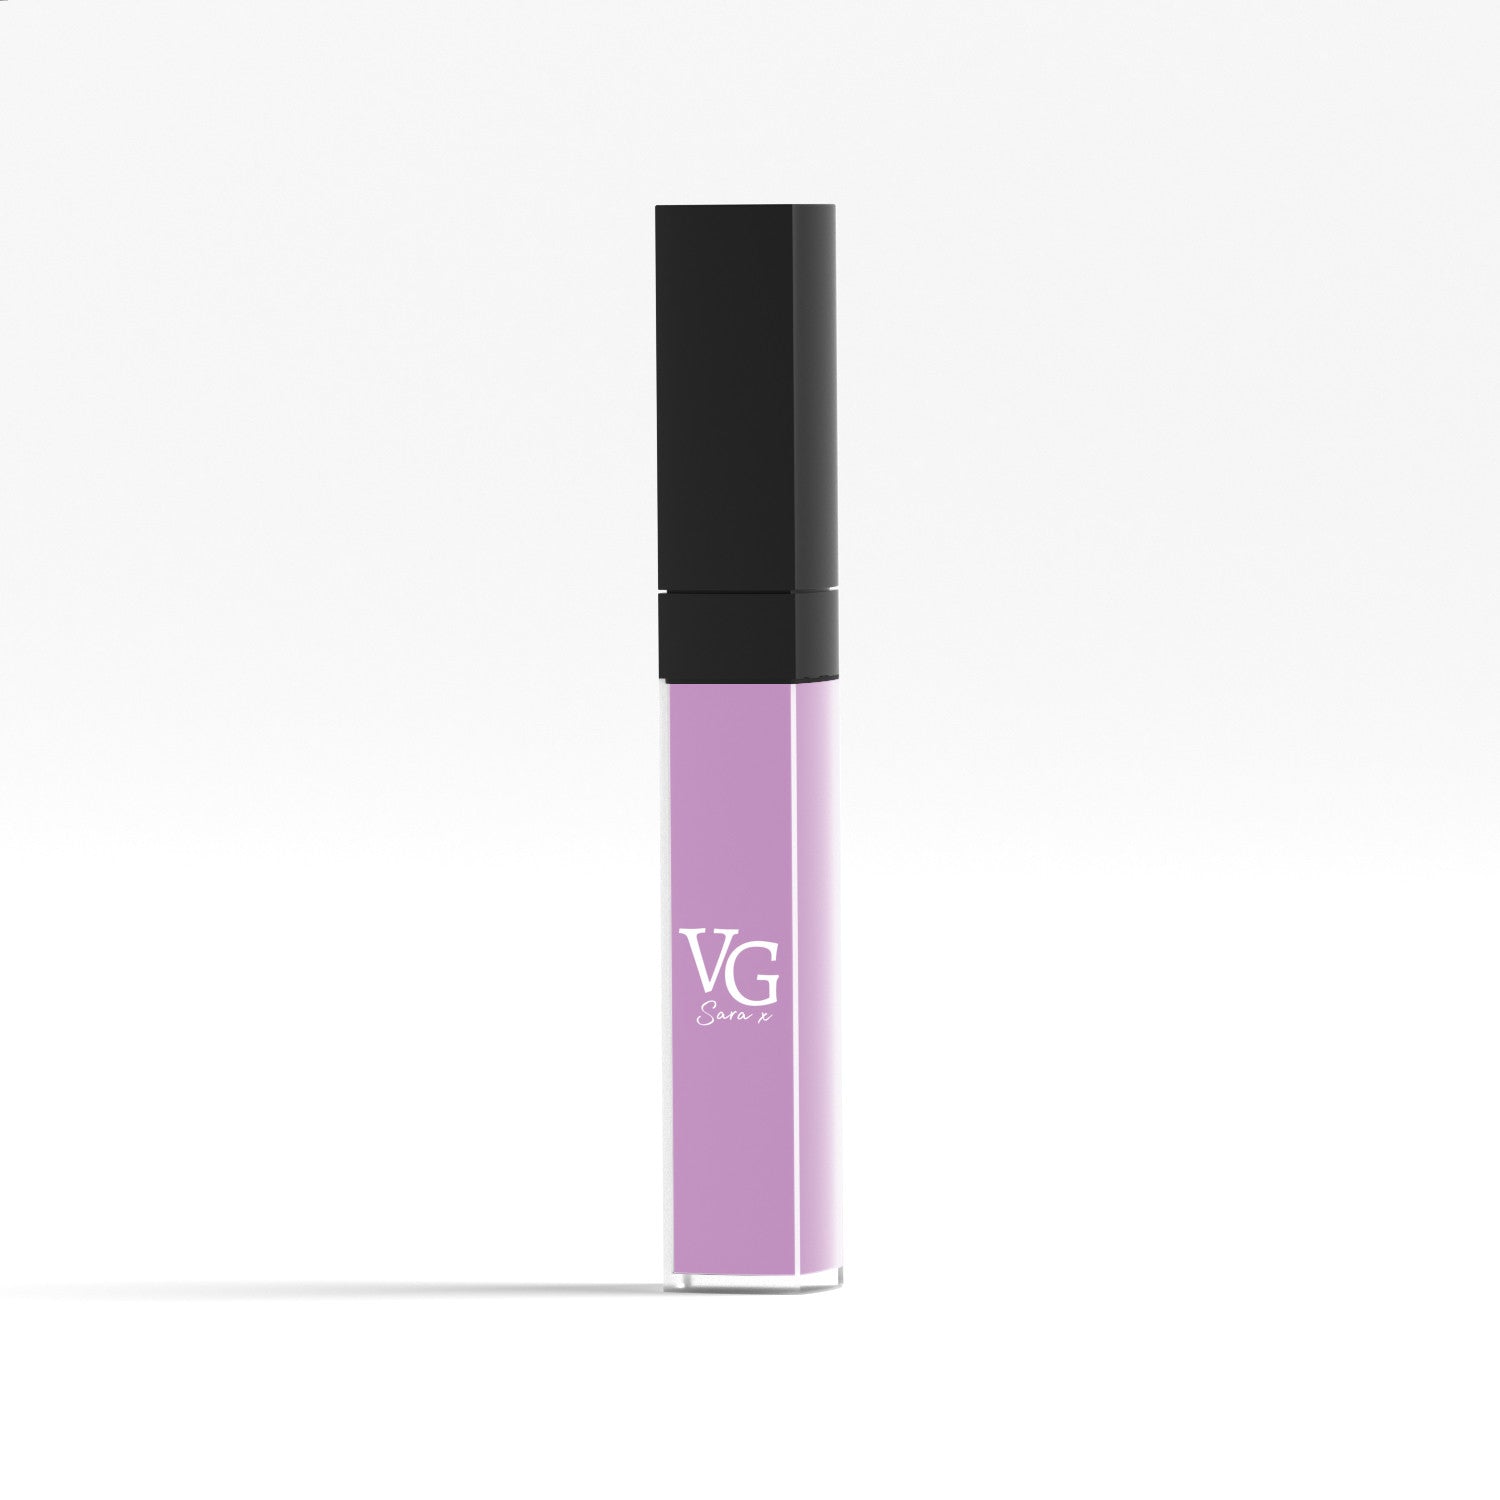 Lavender color vegan liquid lipstick with VG branding